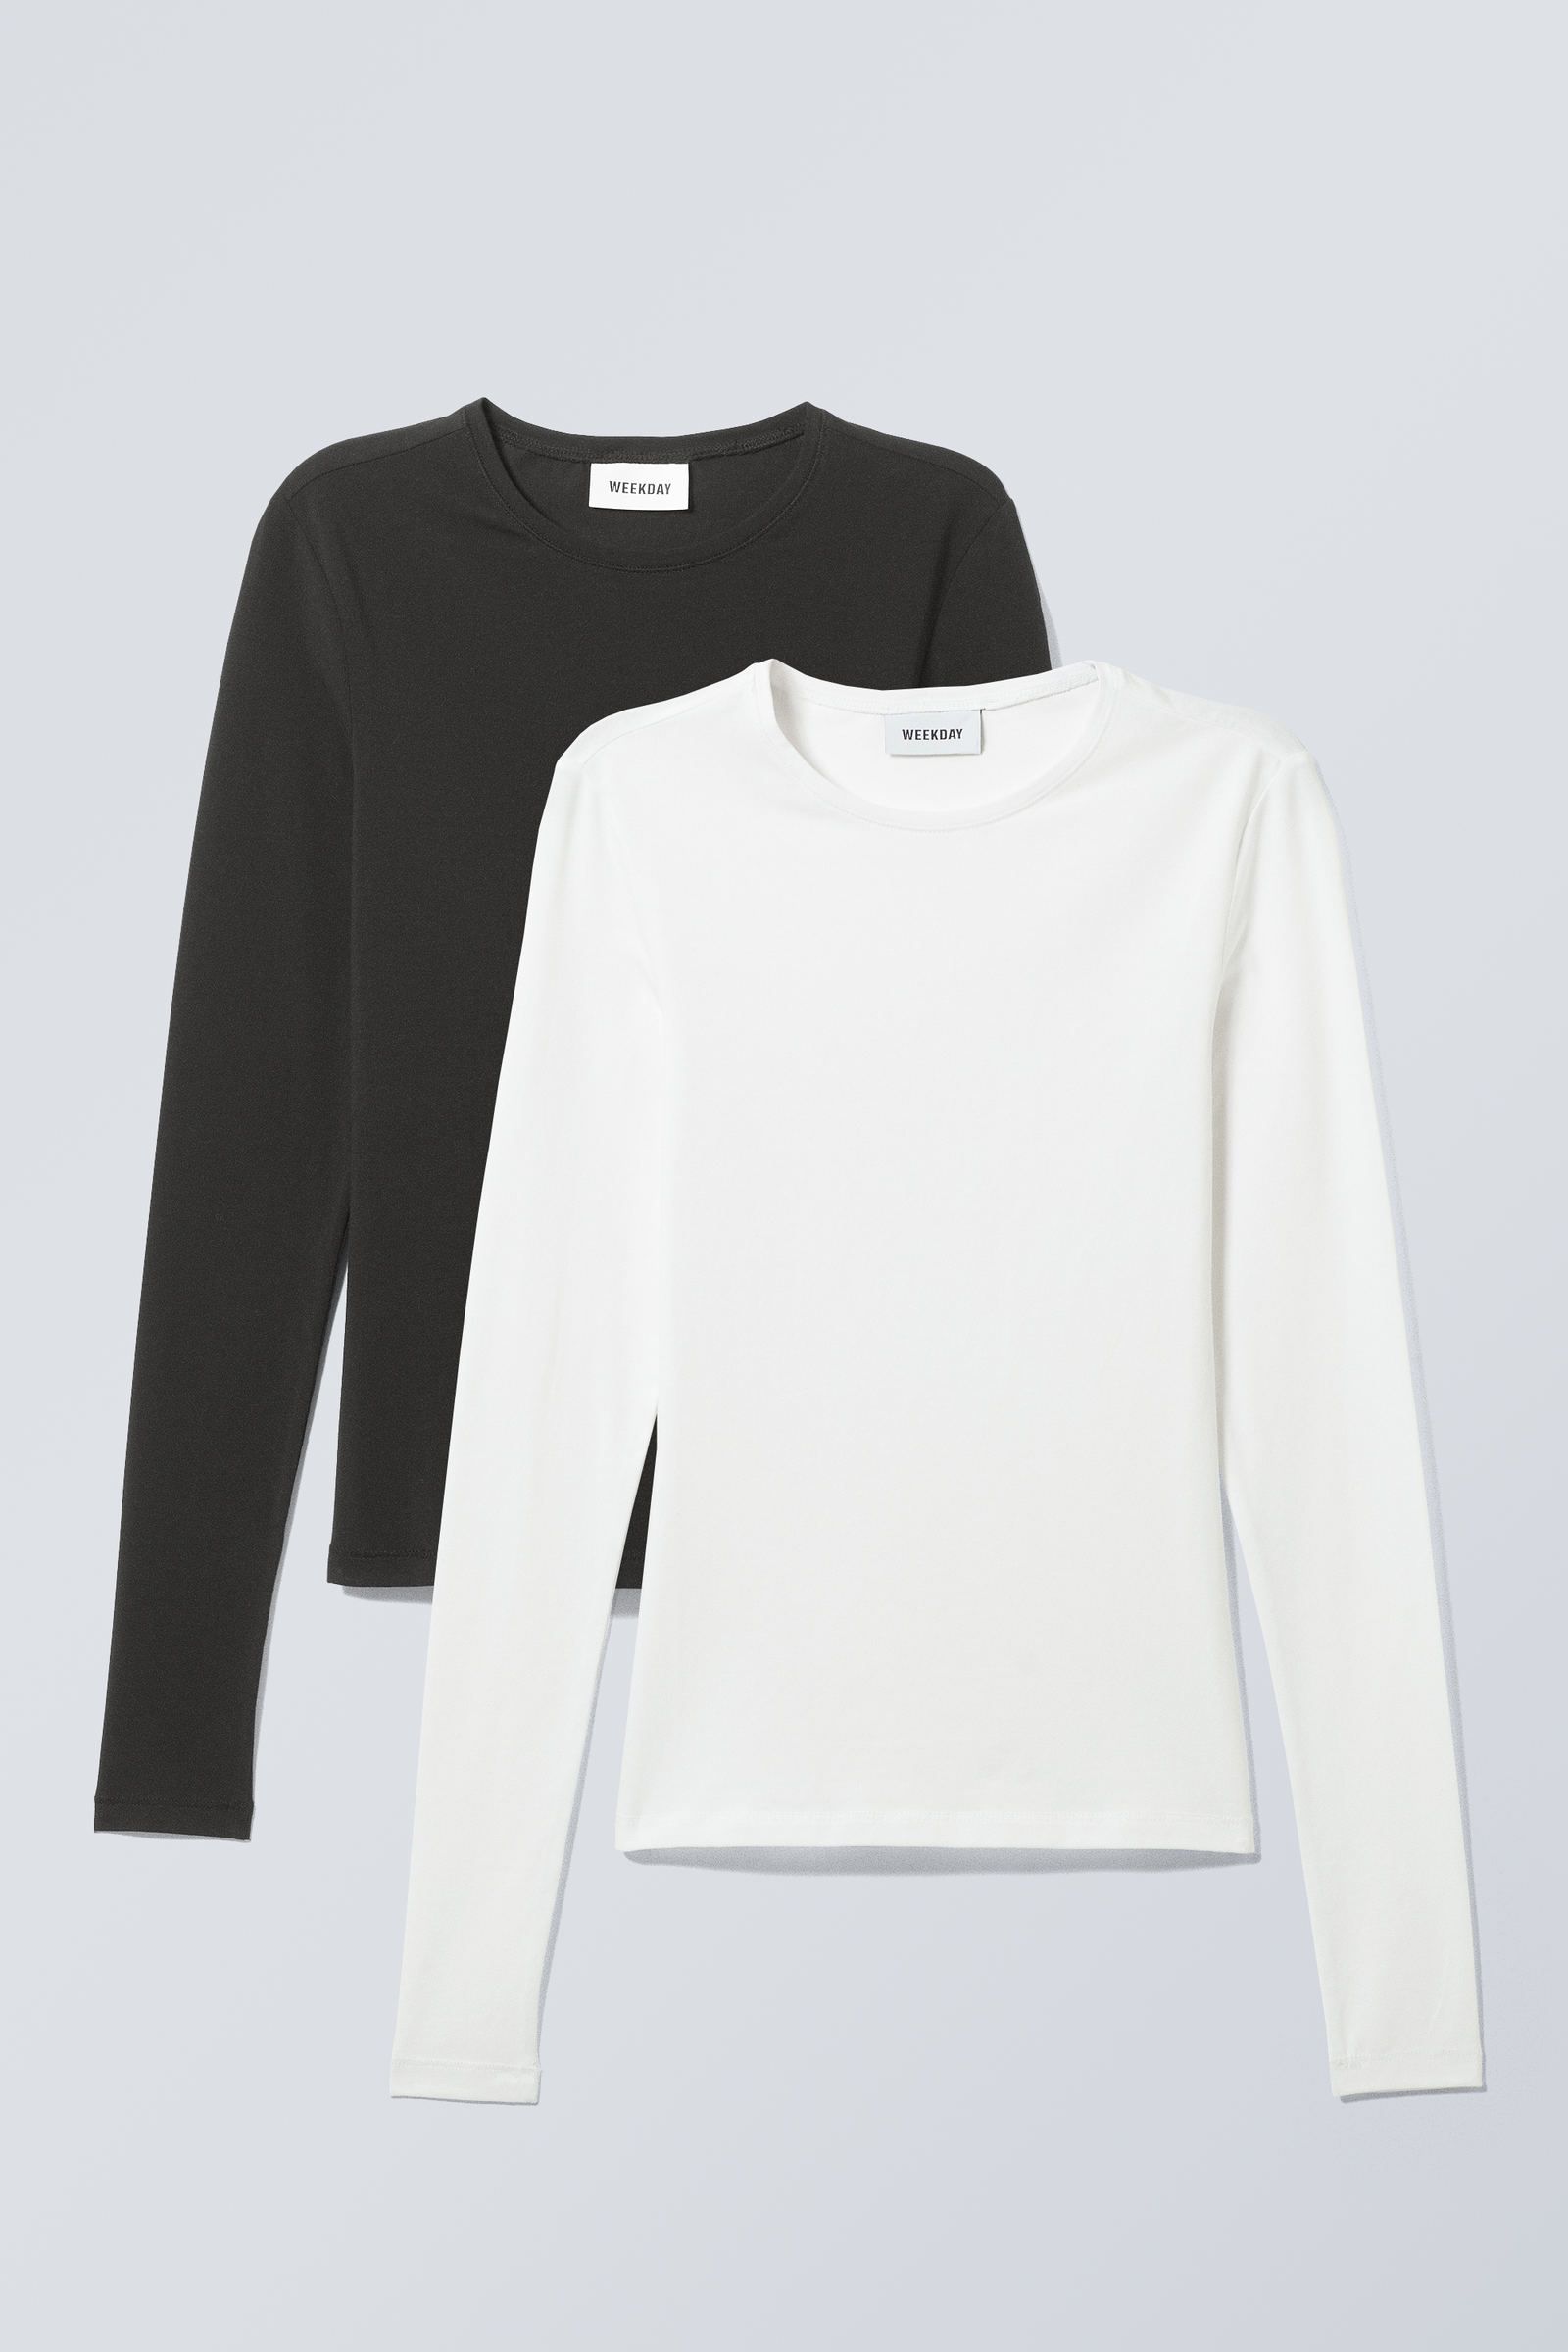 2-pack slim fitted long sleeves - Black & White